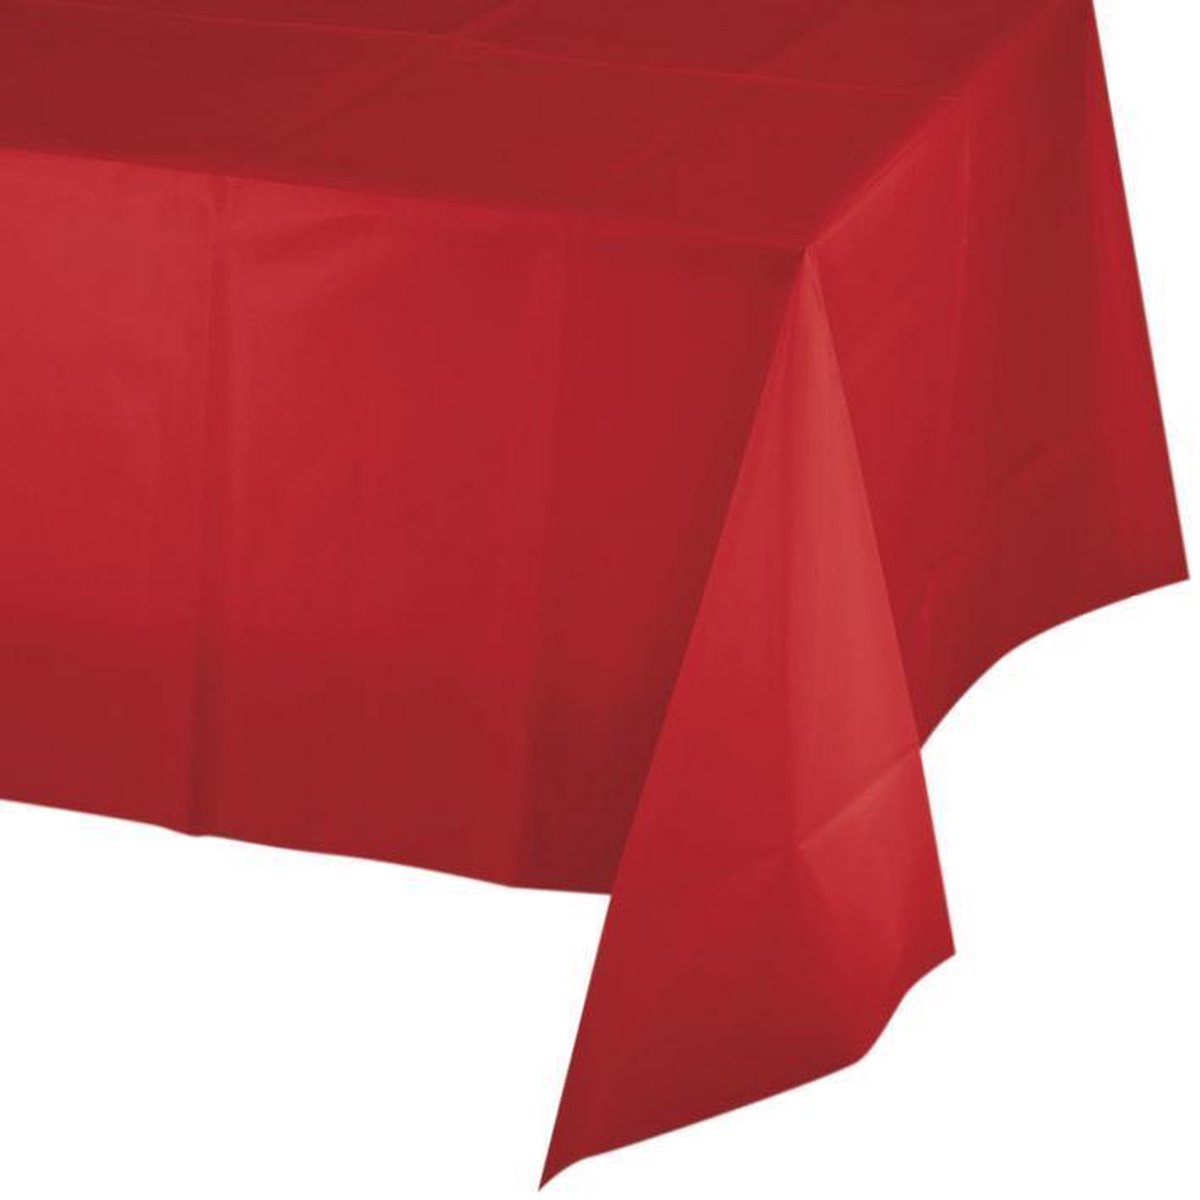 Tafelkleed classic red (137x274cm) - Witbaard